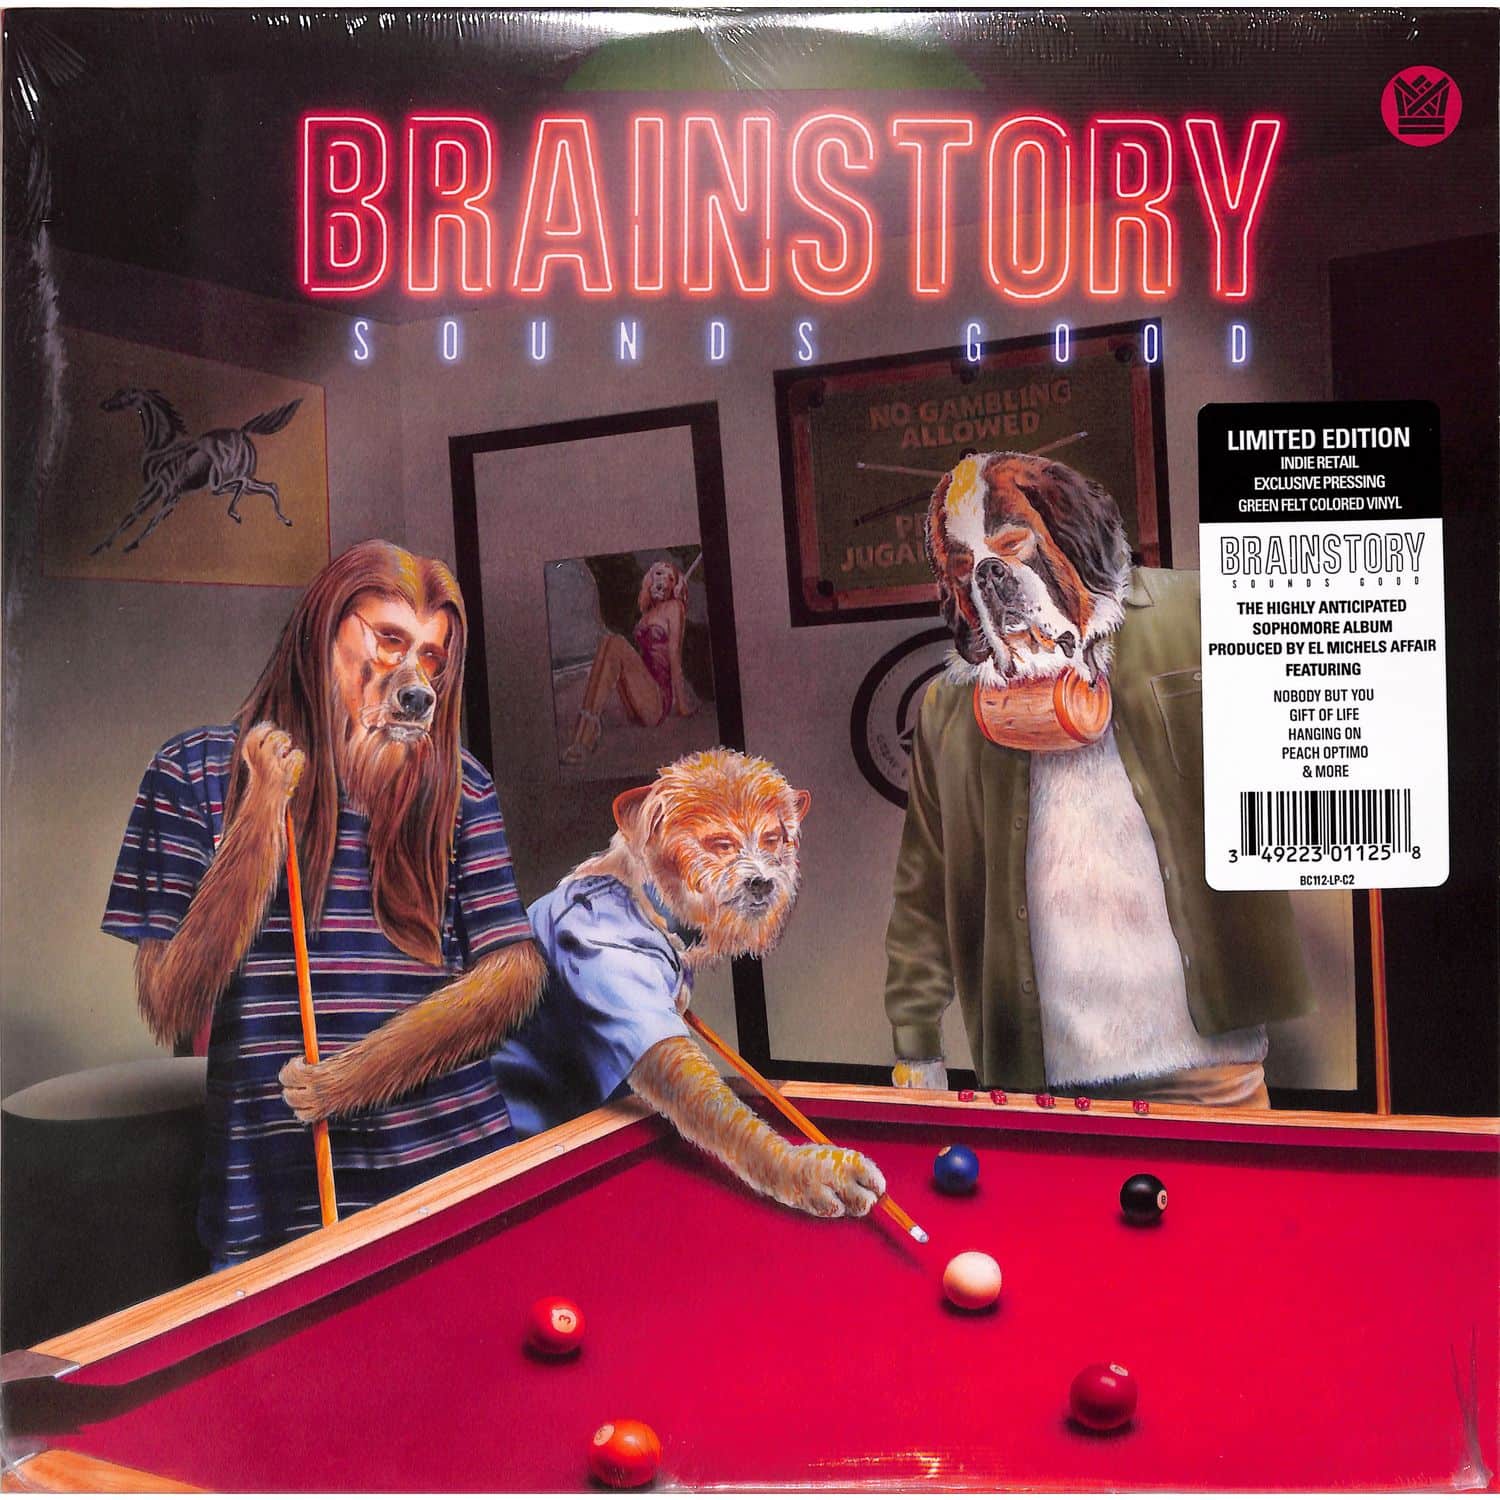 Brainstory - SOUNDS GOOD 